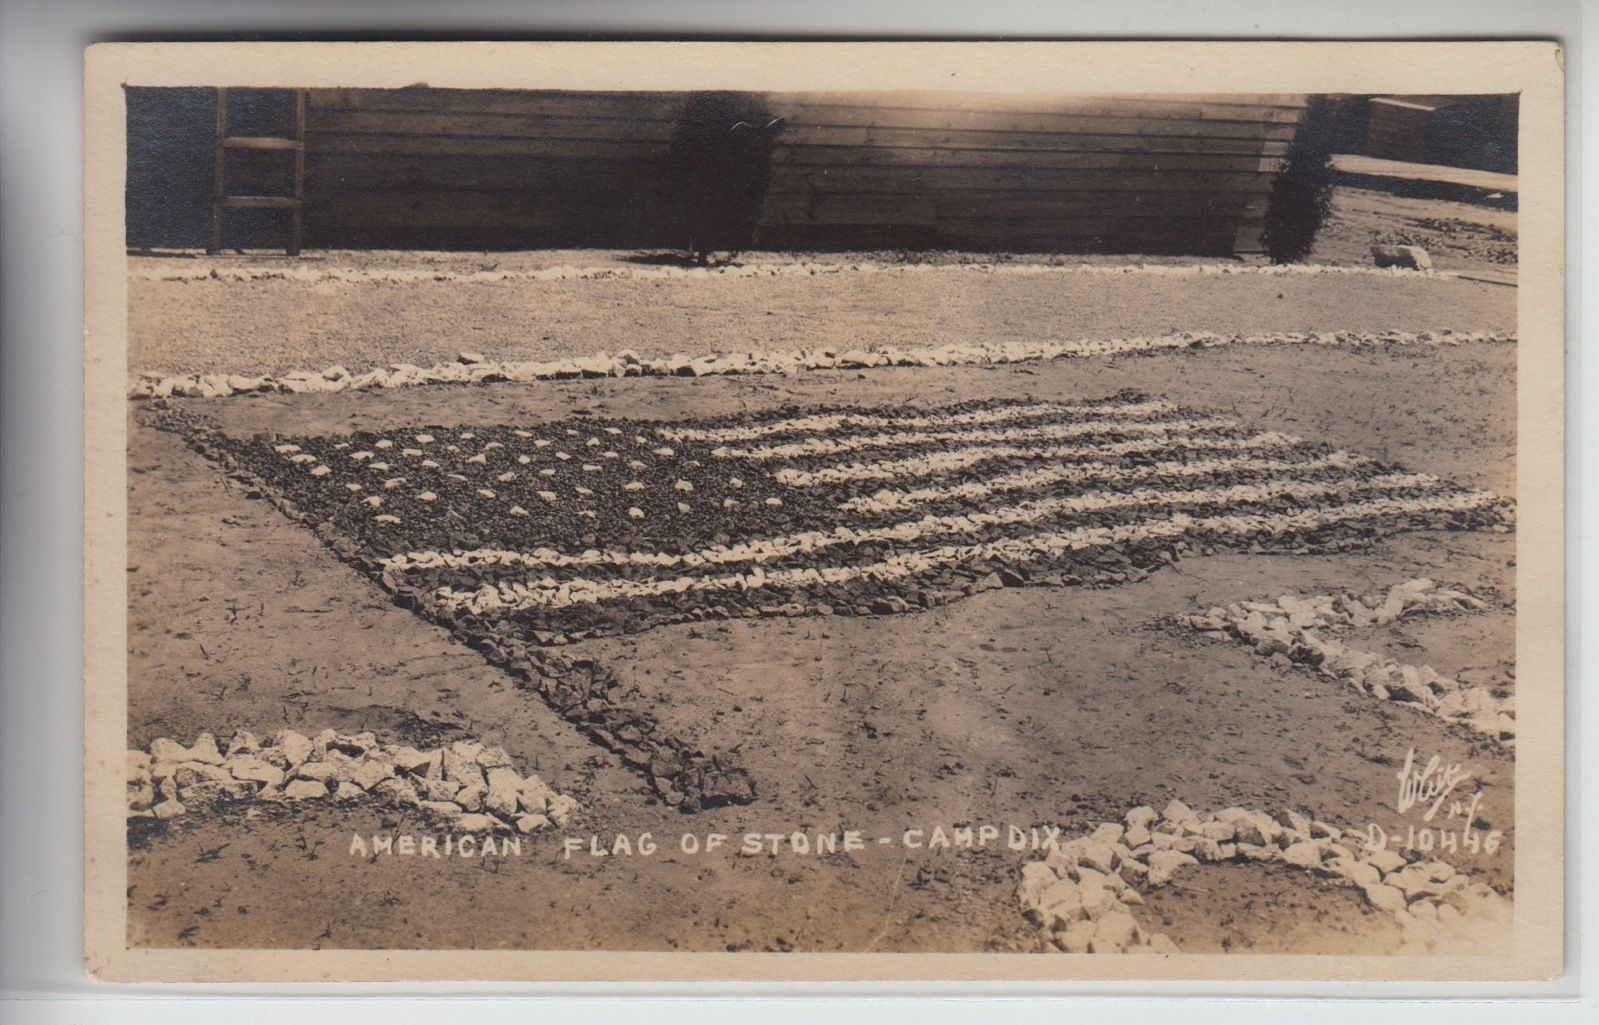 Camp Dix - Ornamental American Flag made of stones